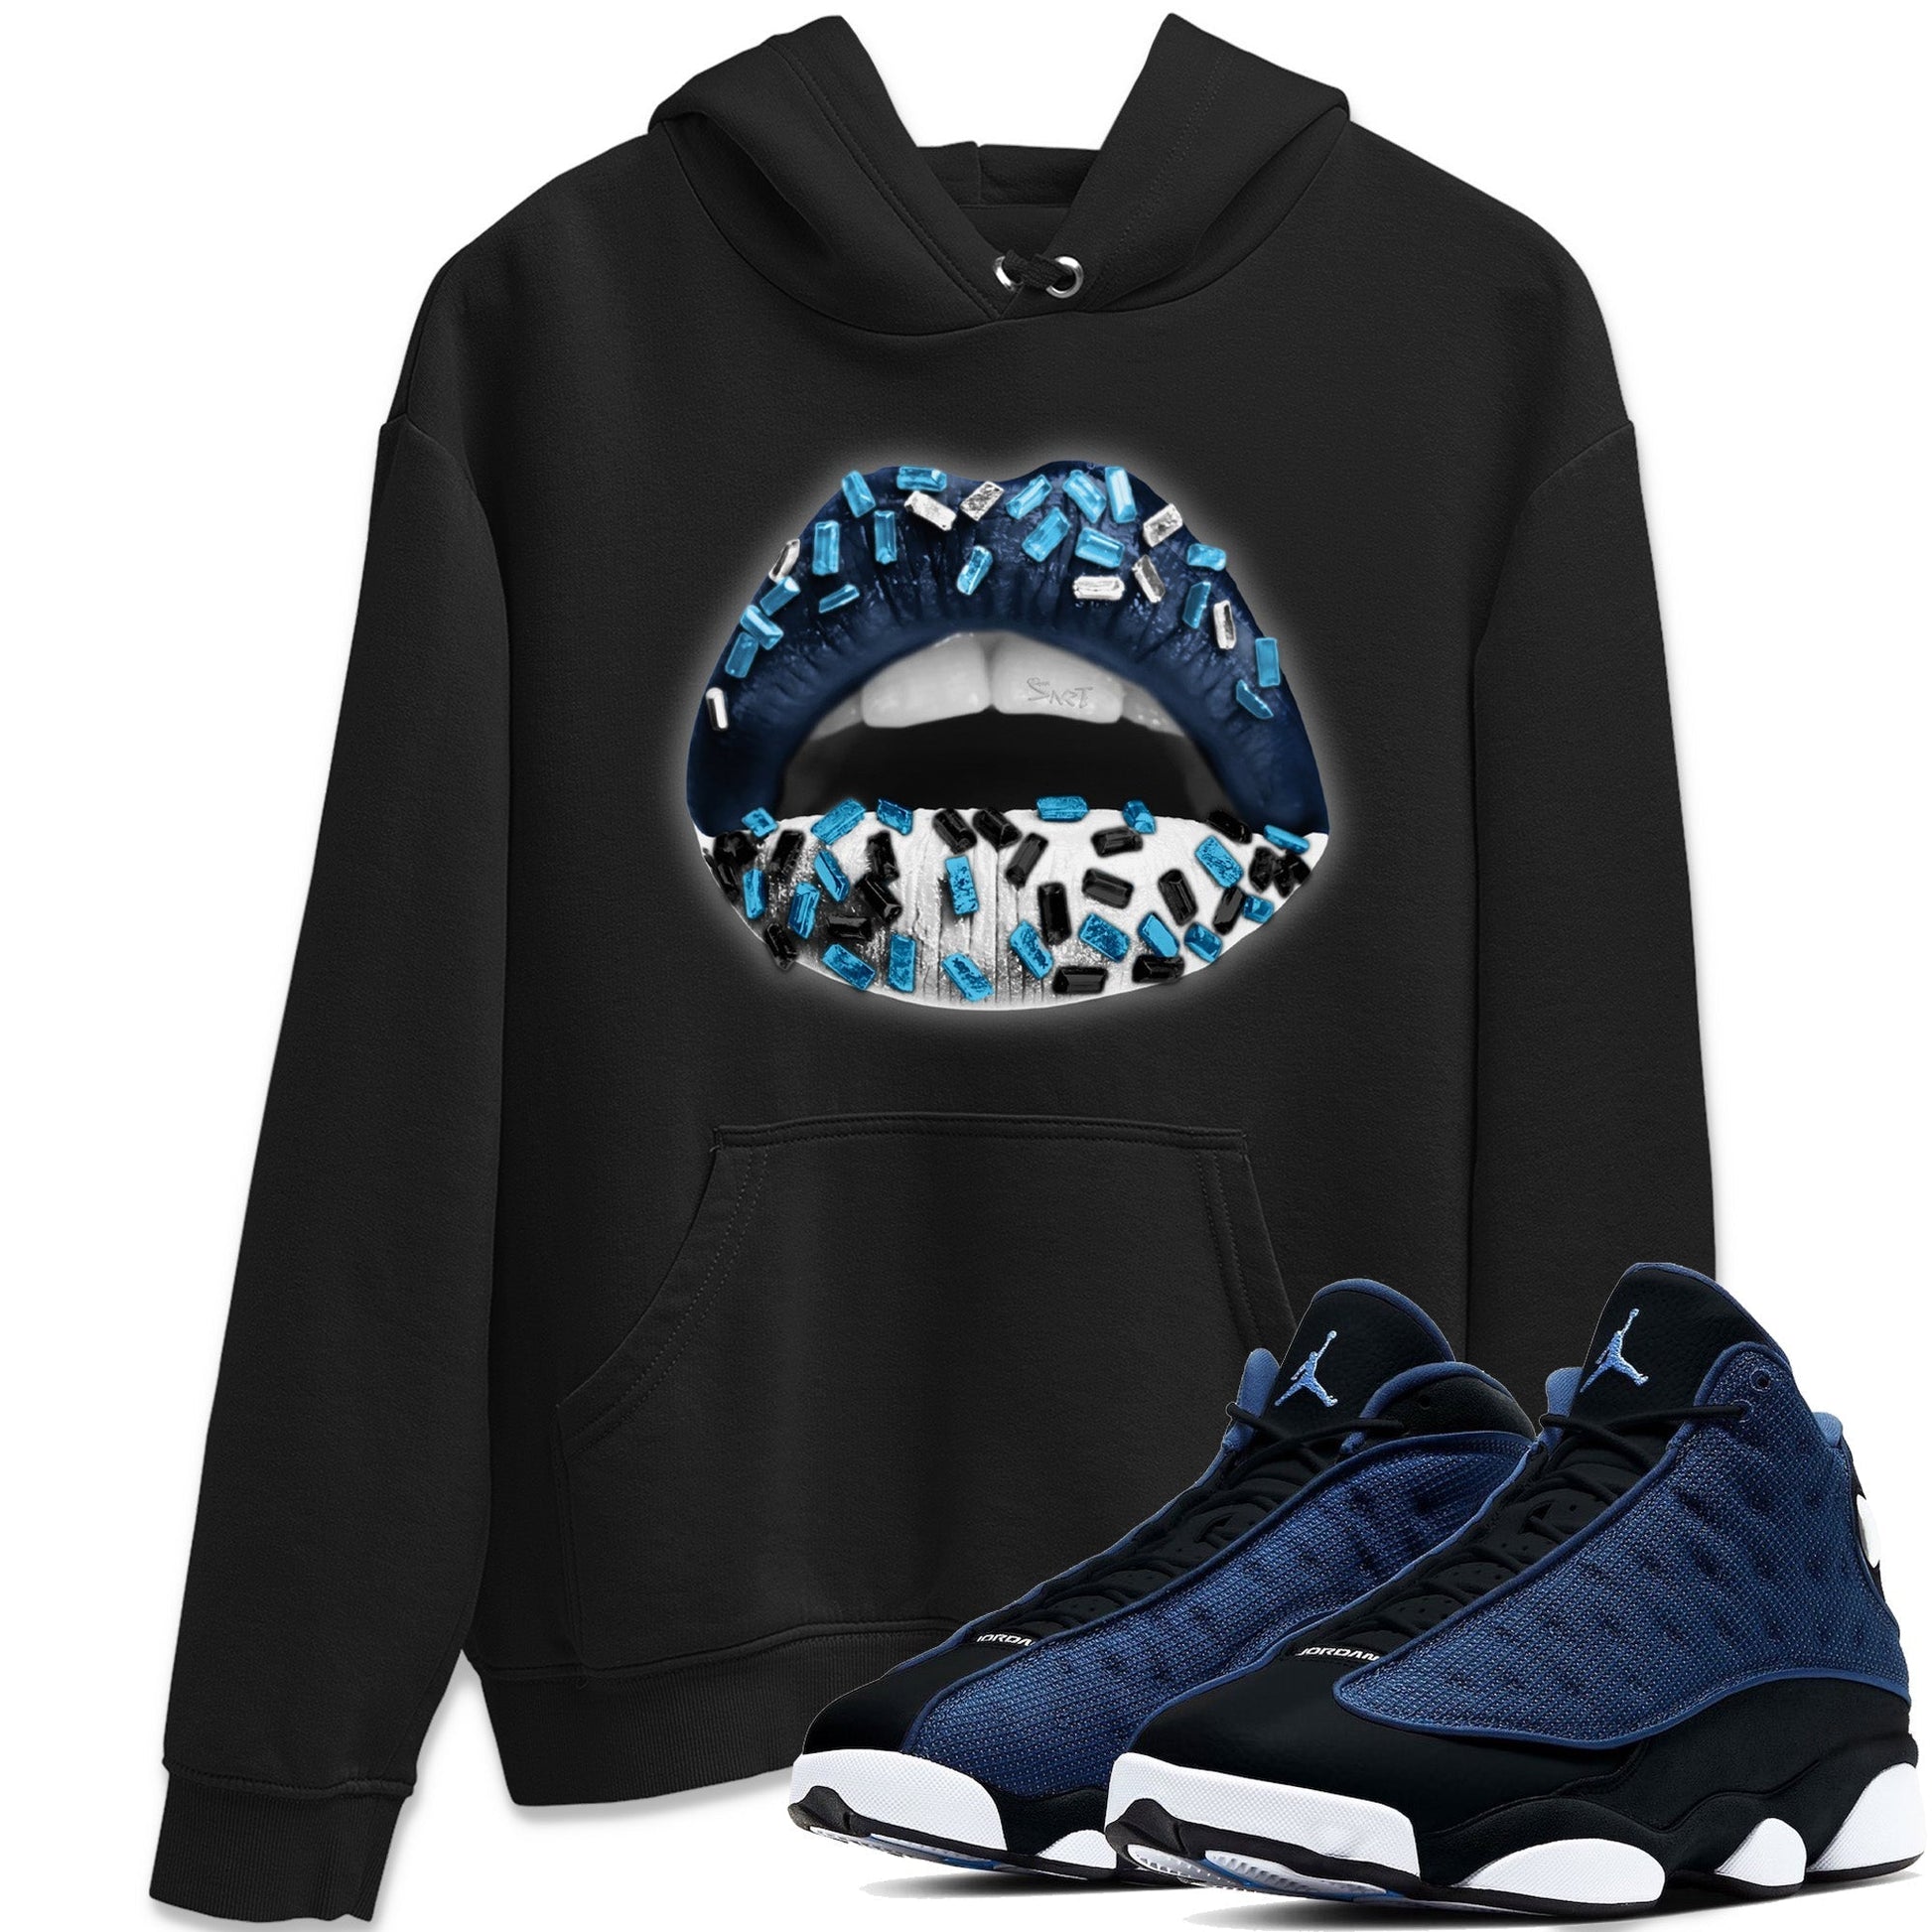 Jordan 13 Brave Blue Sneaker Match Tees Lips Jewel Sneaker Tees Jordan 13 Brave Blue Sneaker Release Tees Unisex Shirts